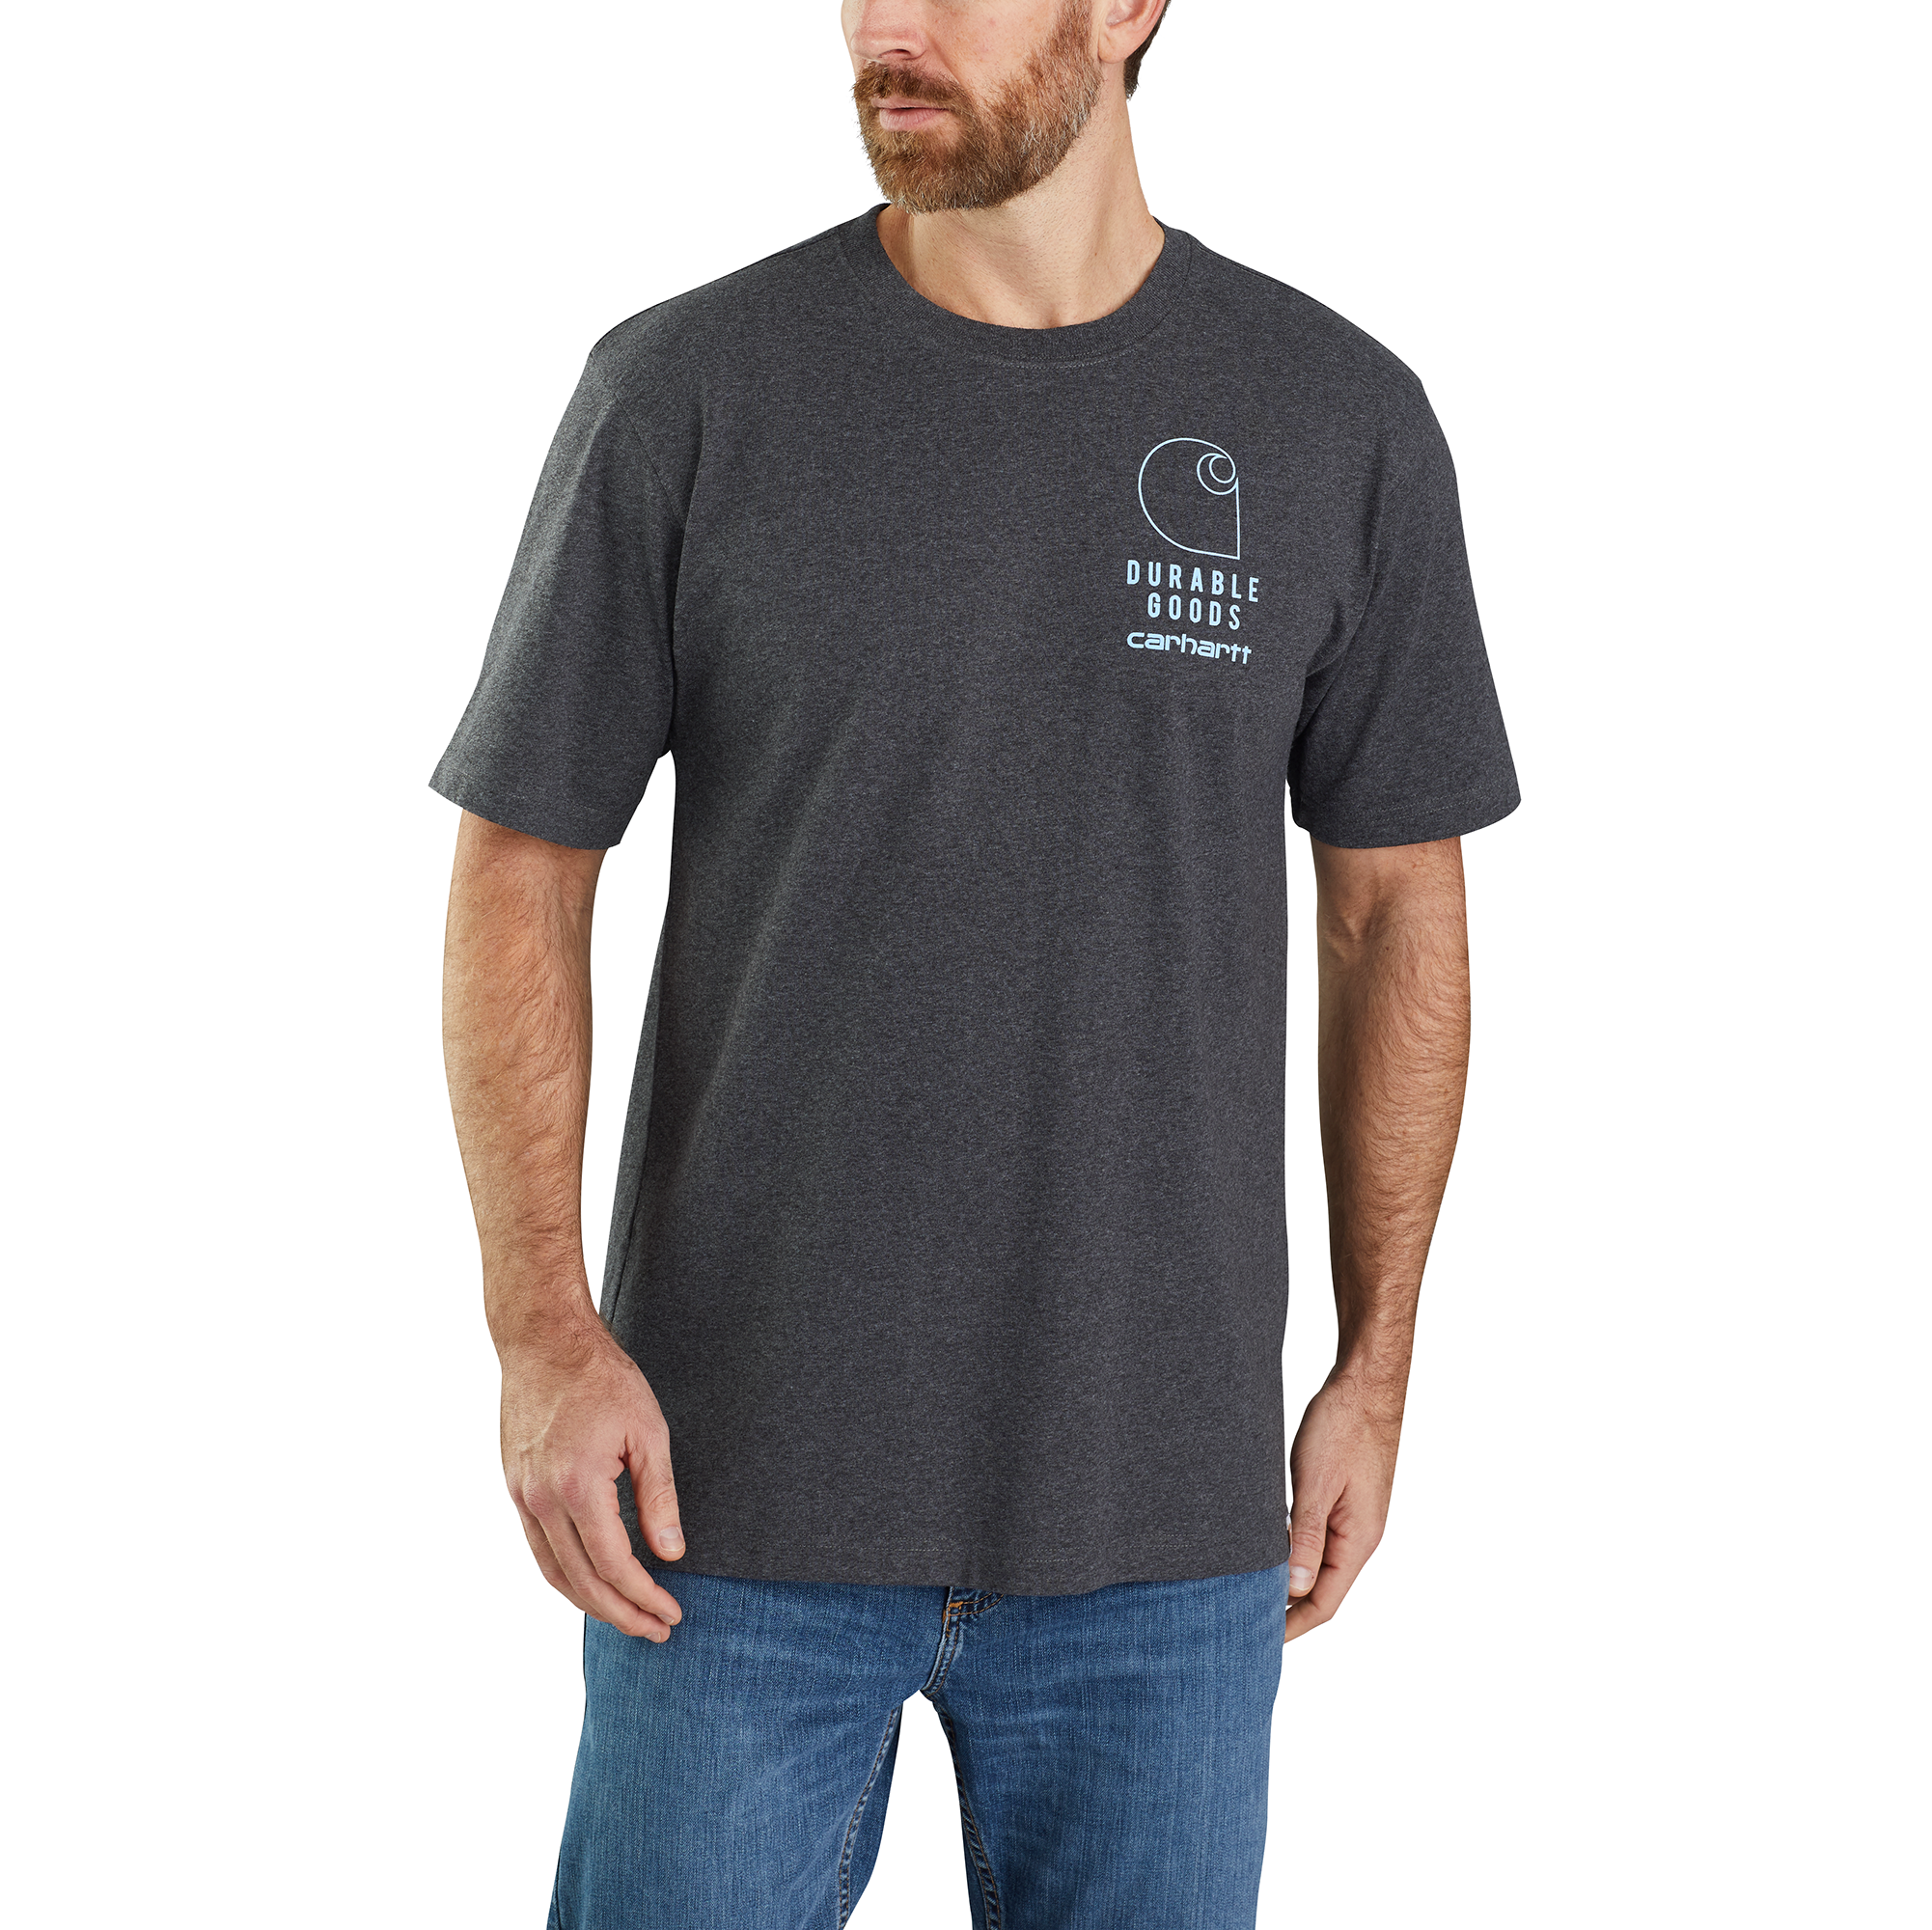 Carhartt Loose Fit Heavyweight Short-Sleeve Durable Goods Graphic T-Shirt